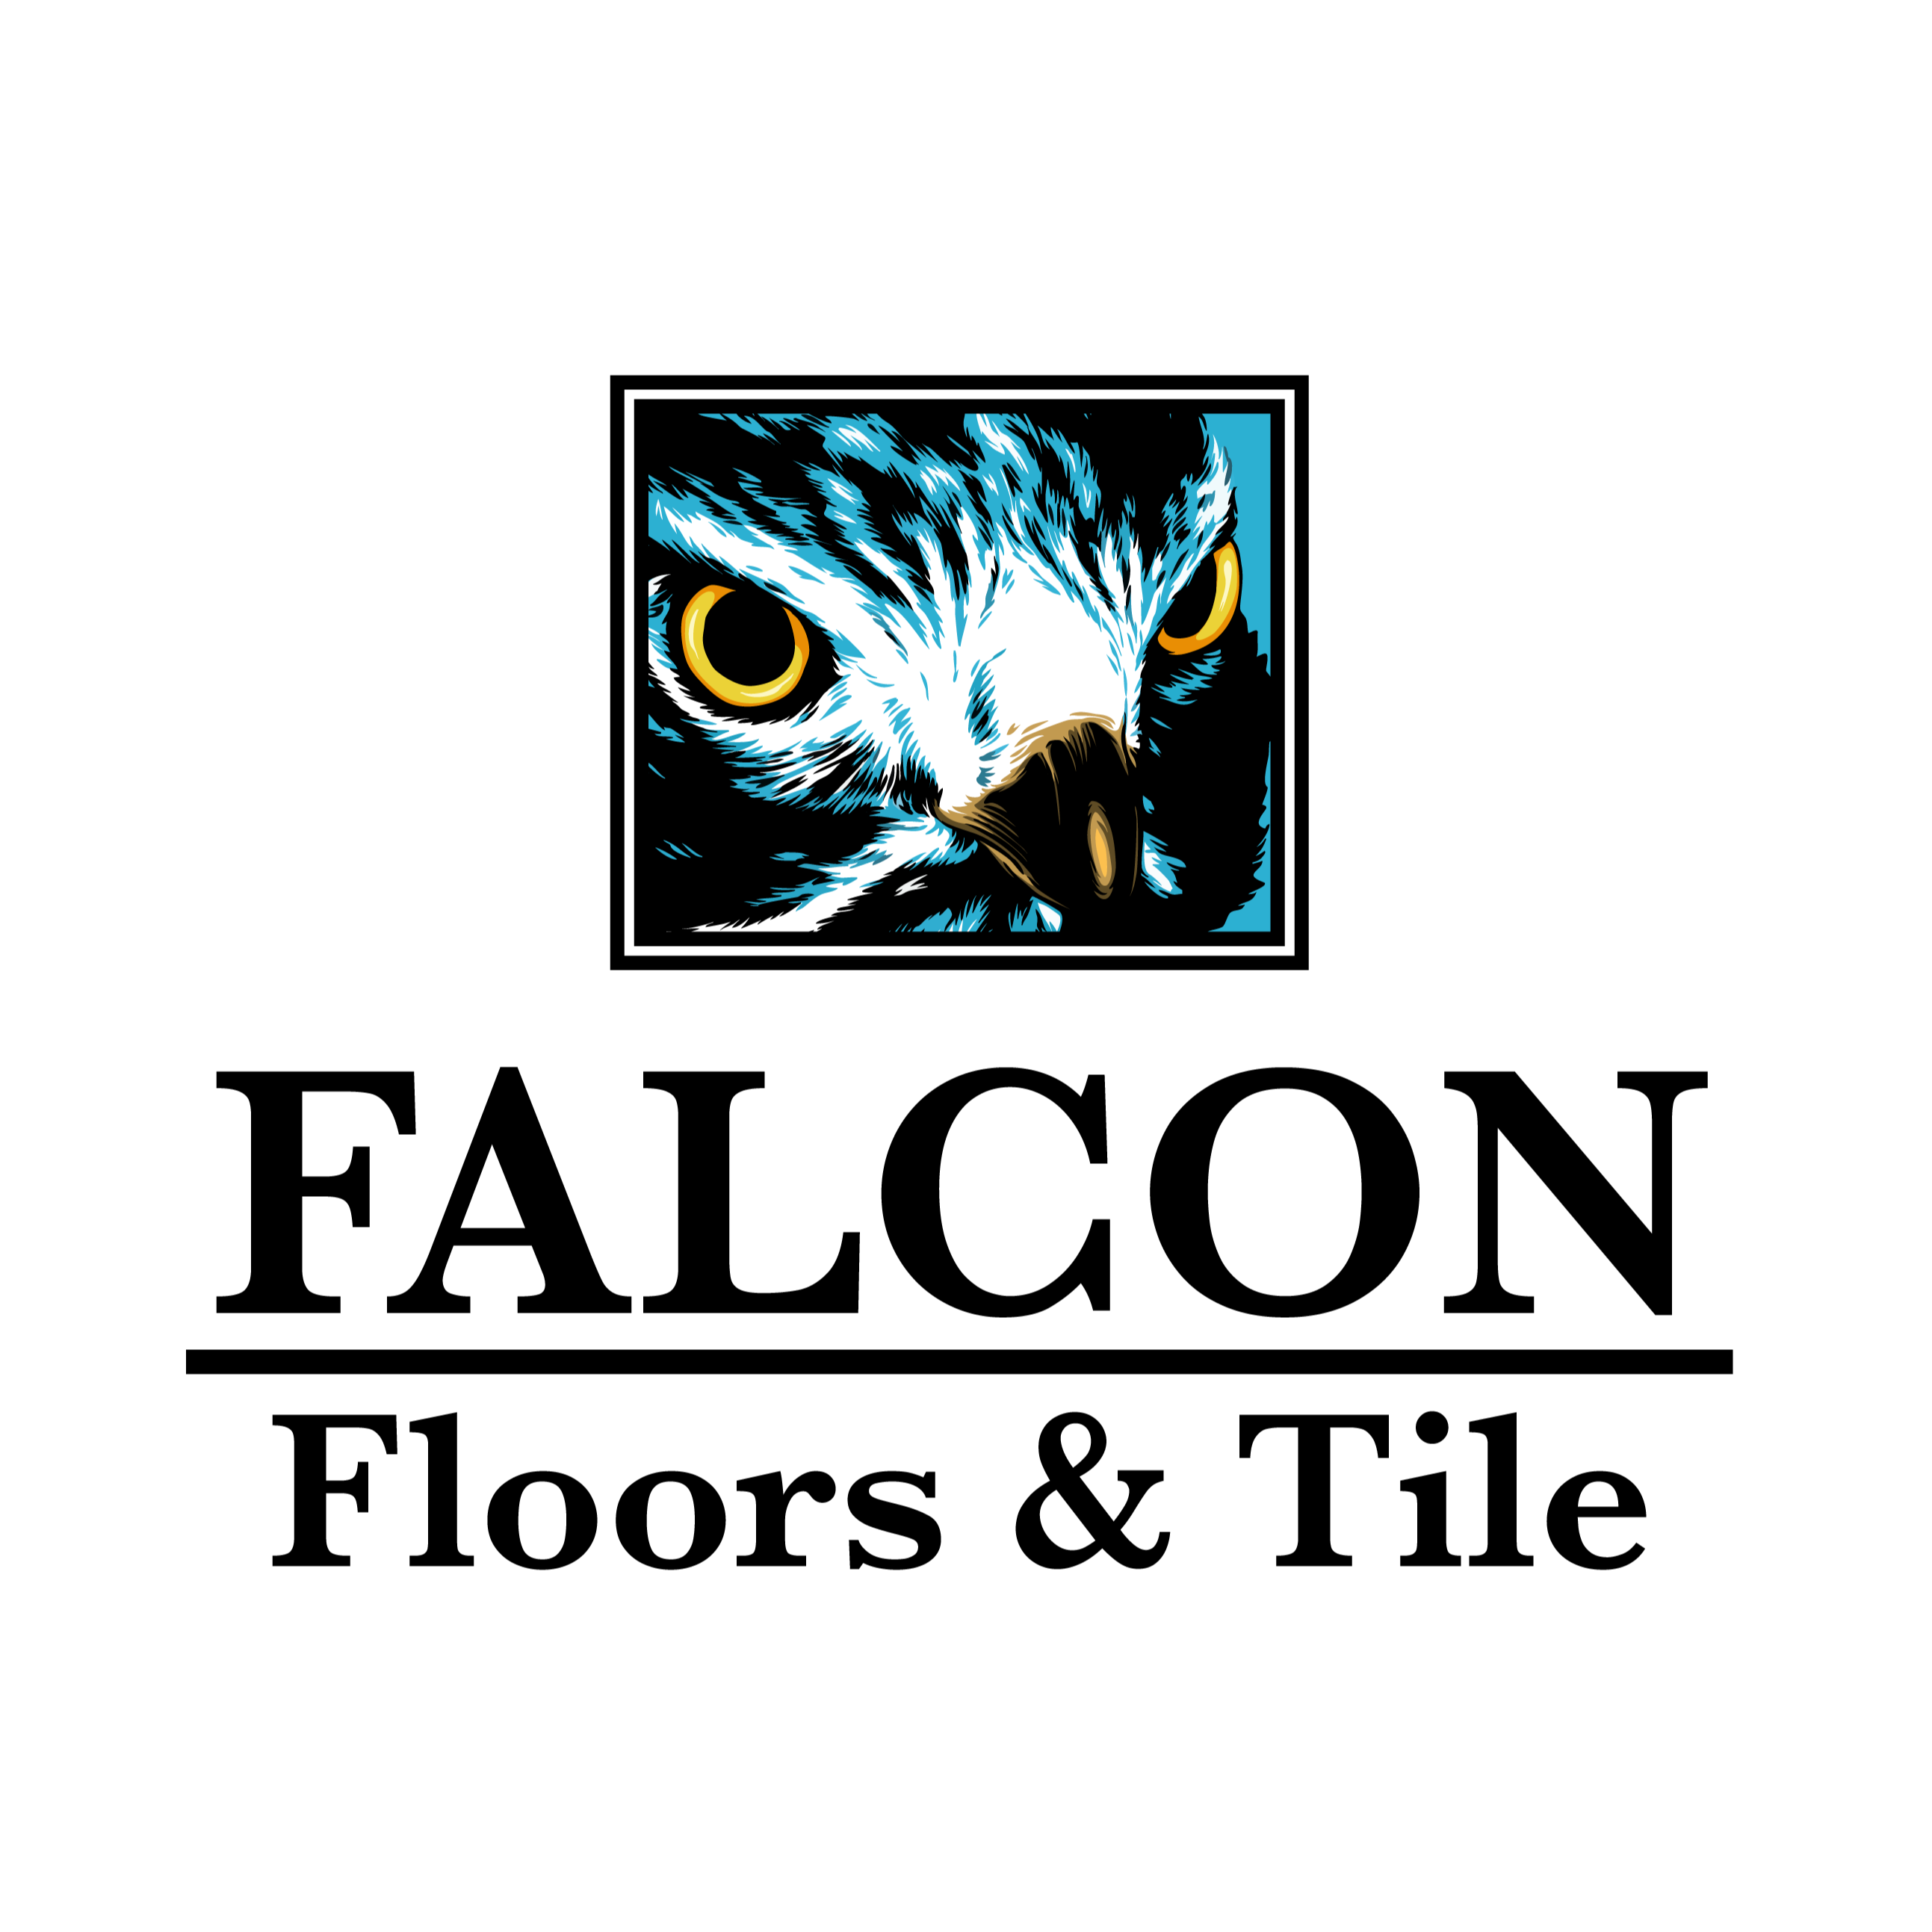 Falcon Floors & Tile